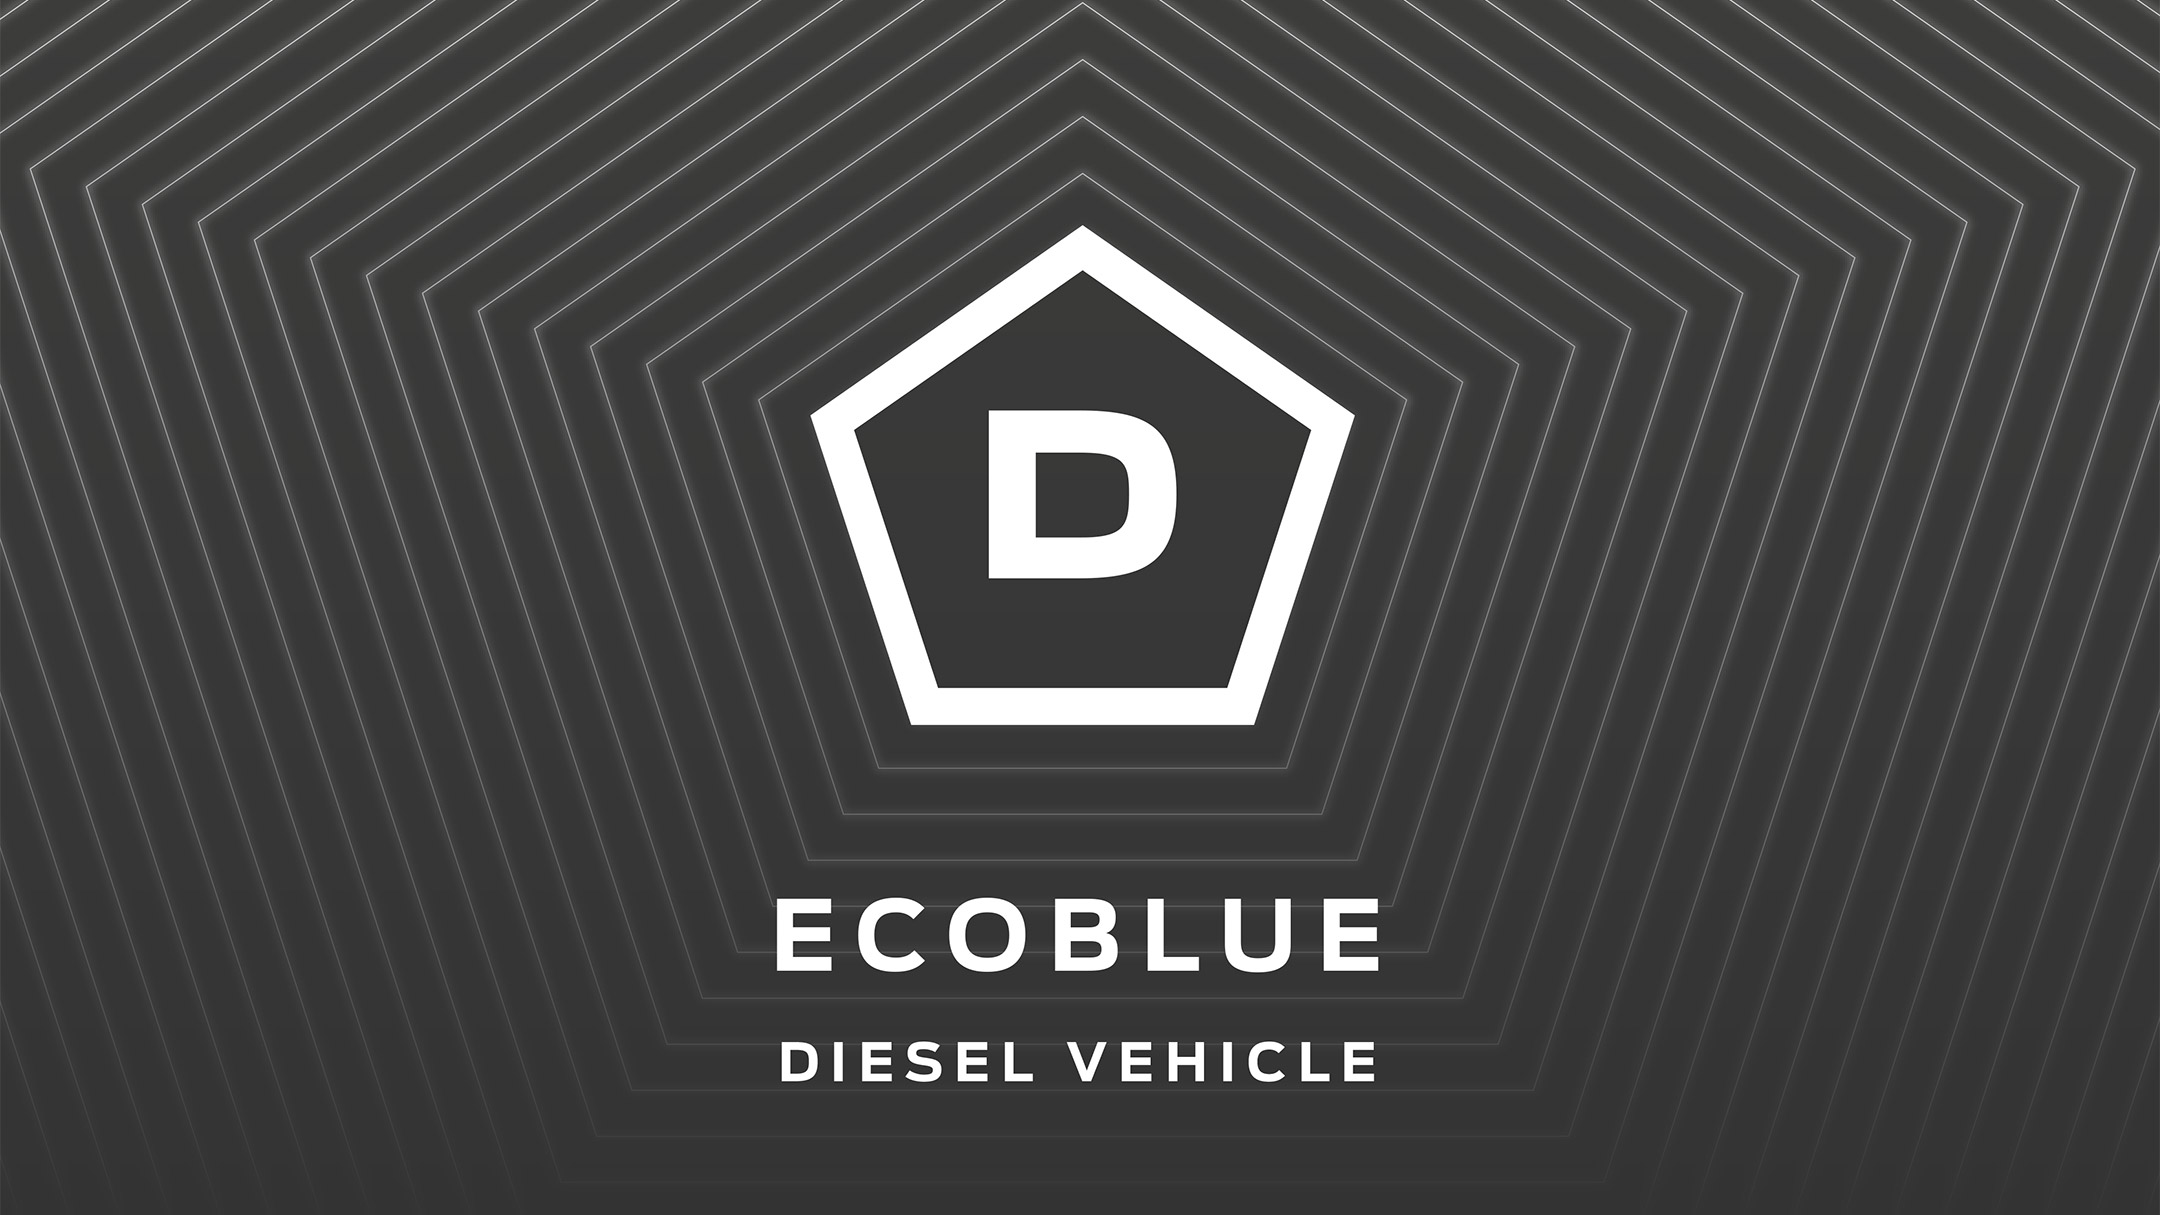 Diesel Ecoblue